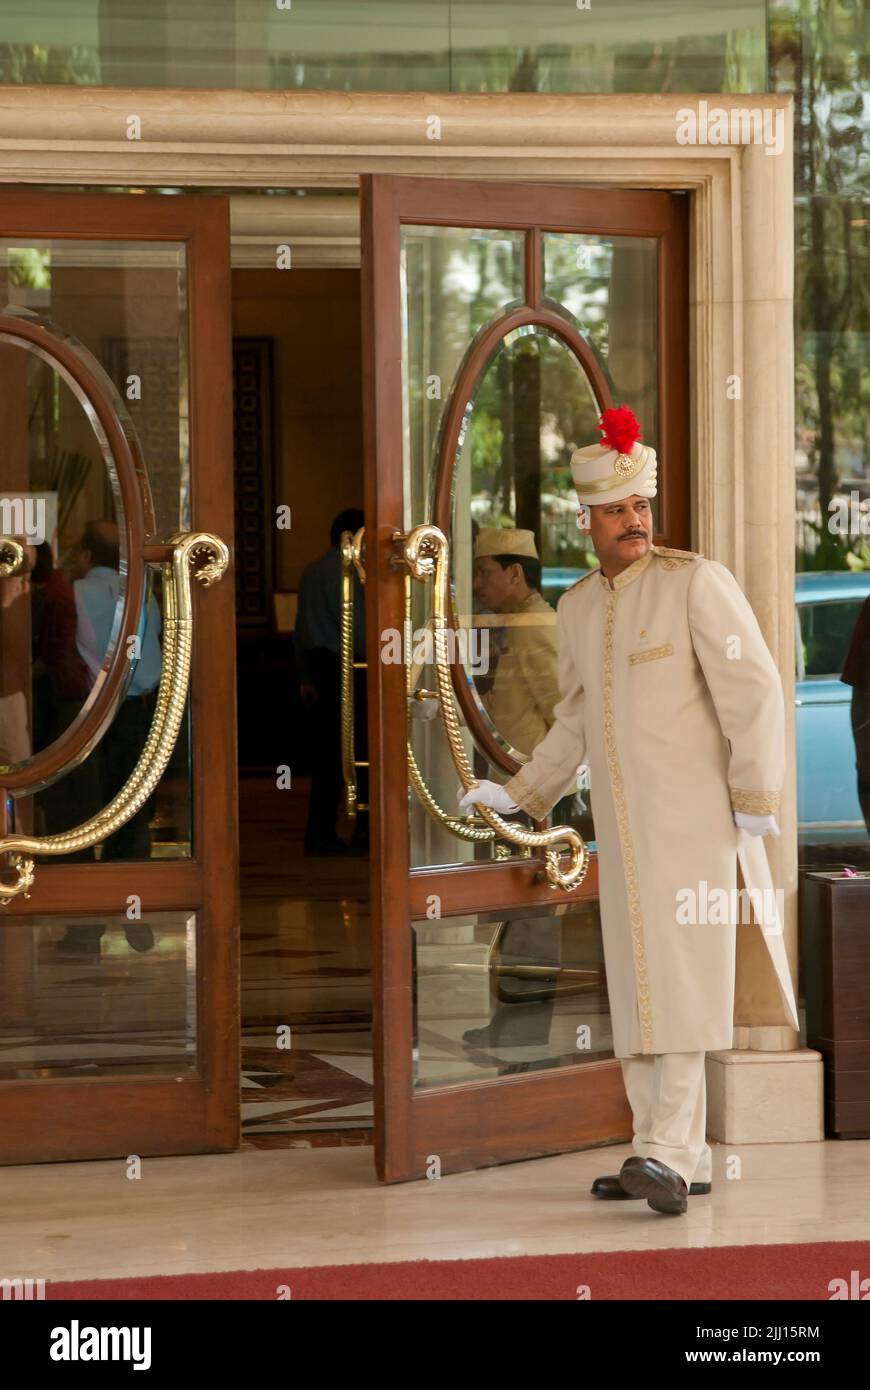 El hombre de la puerta abre la puerta de entrada en el hotel, Mumbai, la India Foto de stock